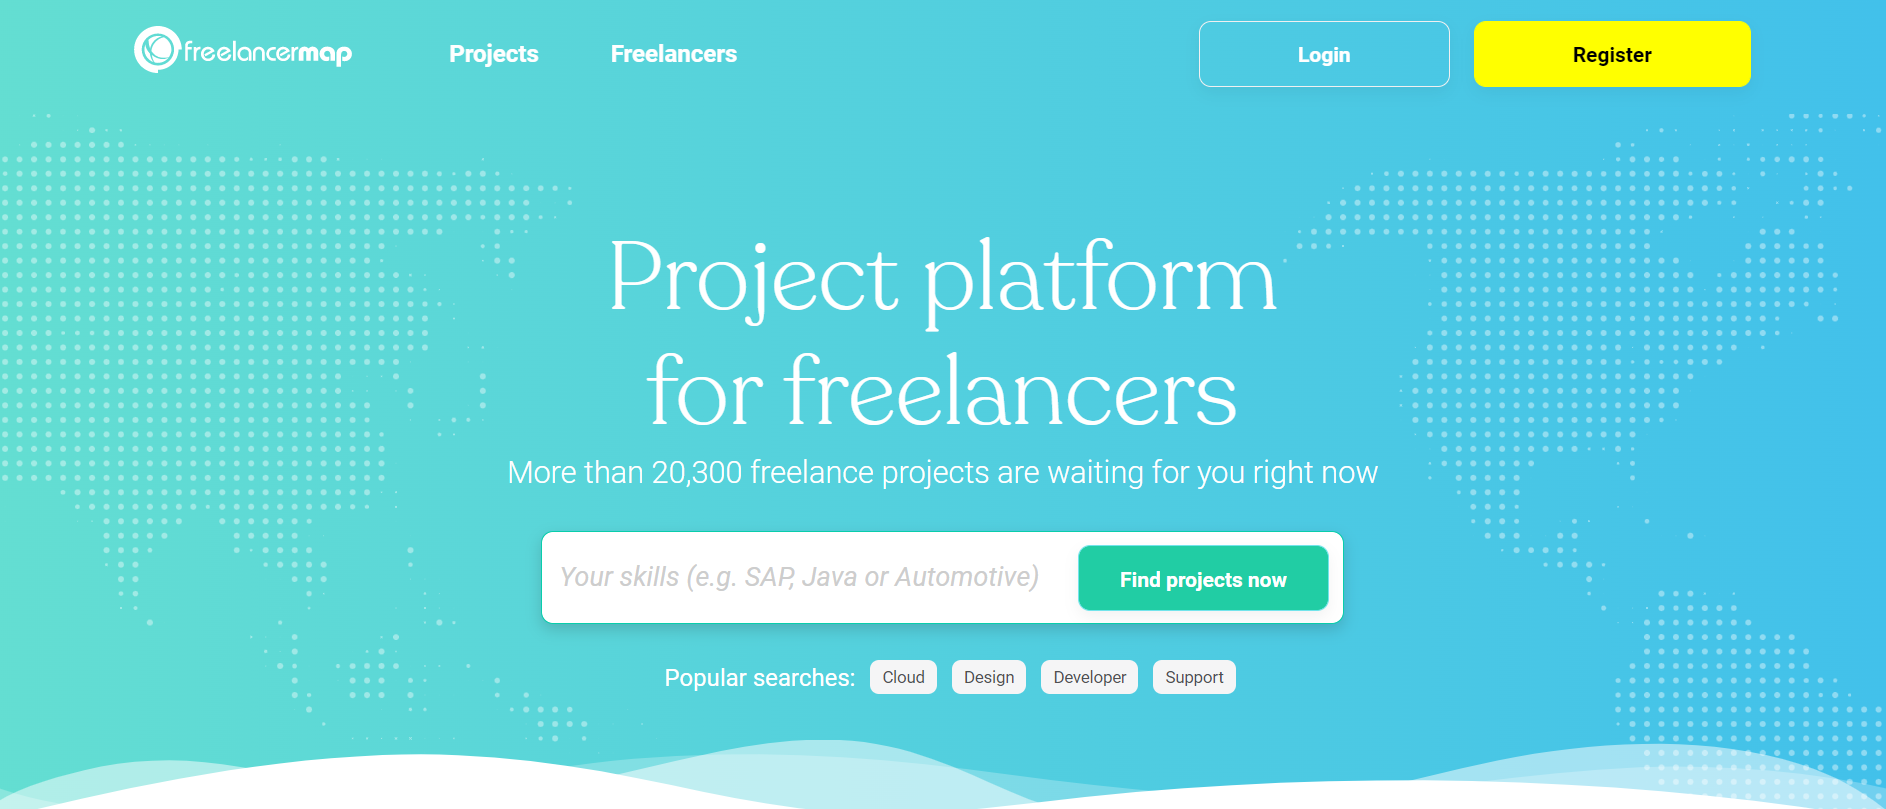 FreelancerMap